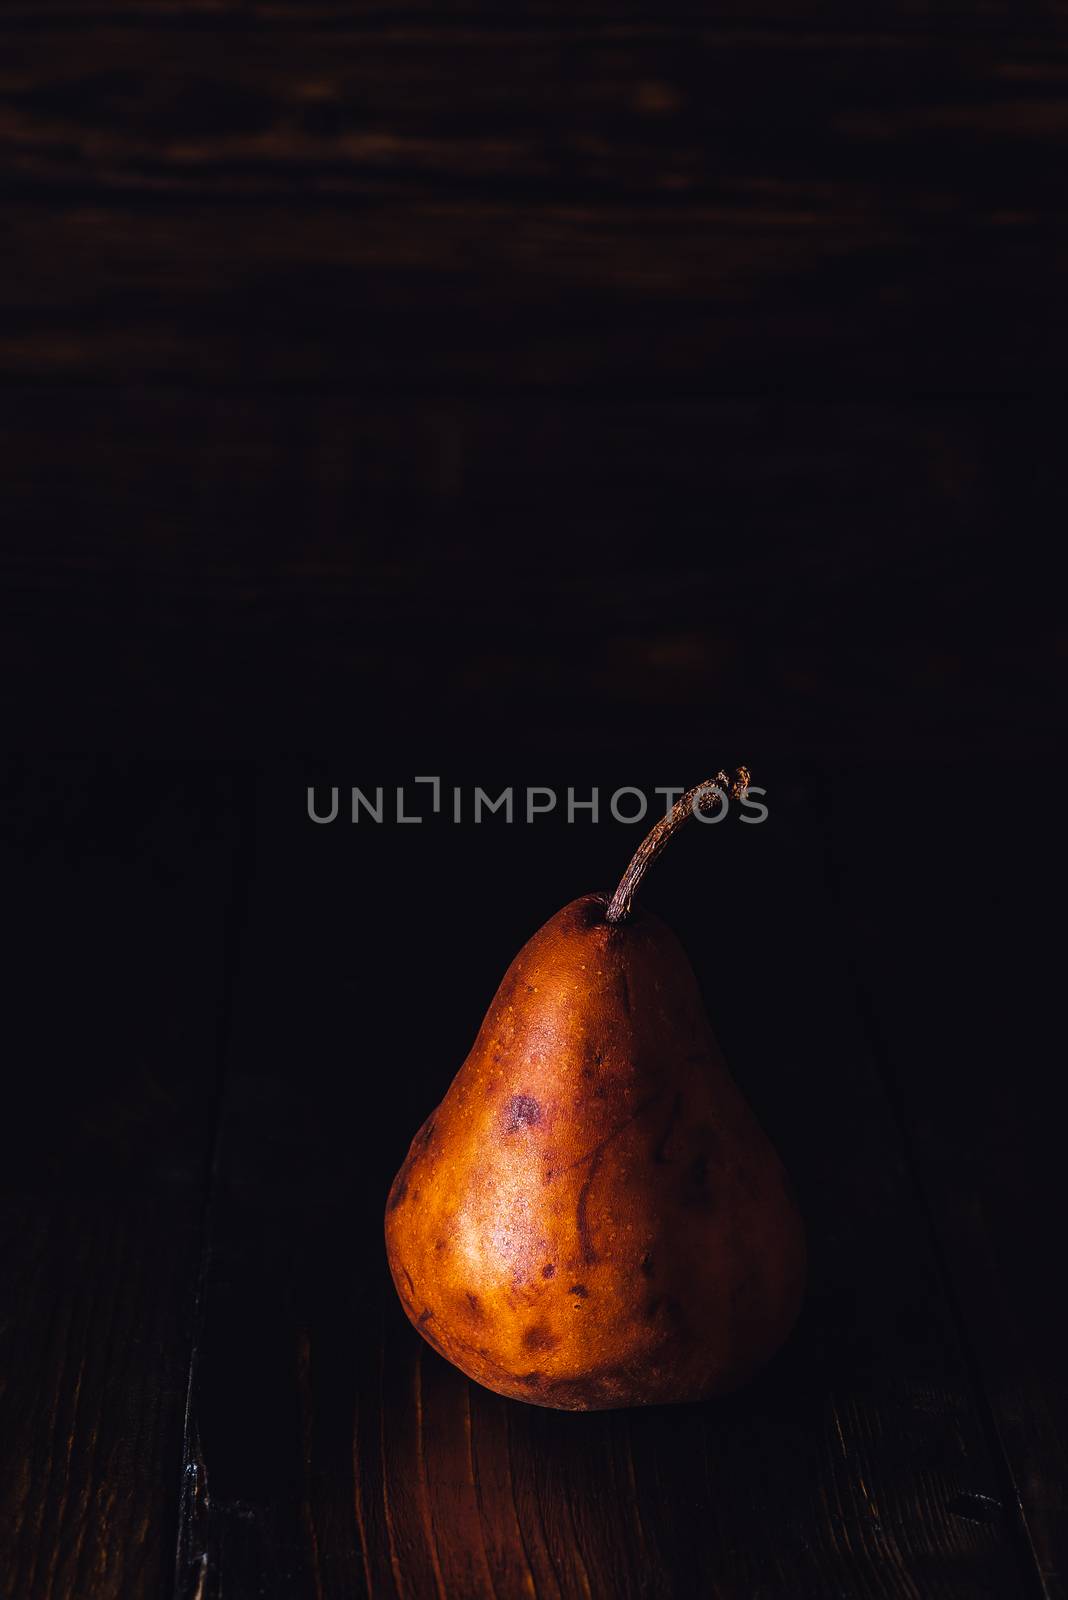 One Pear on Dark Background by Seva_blsv